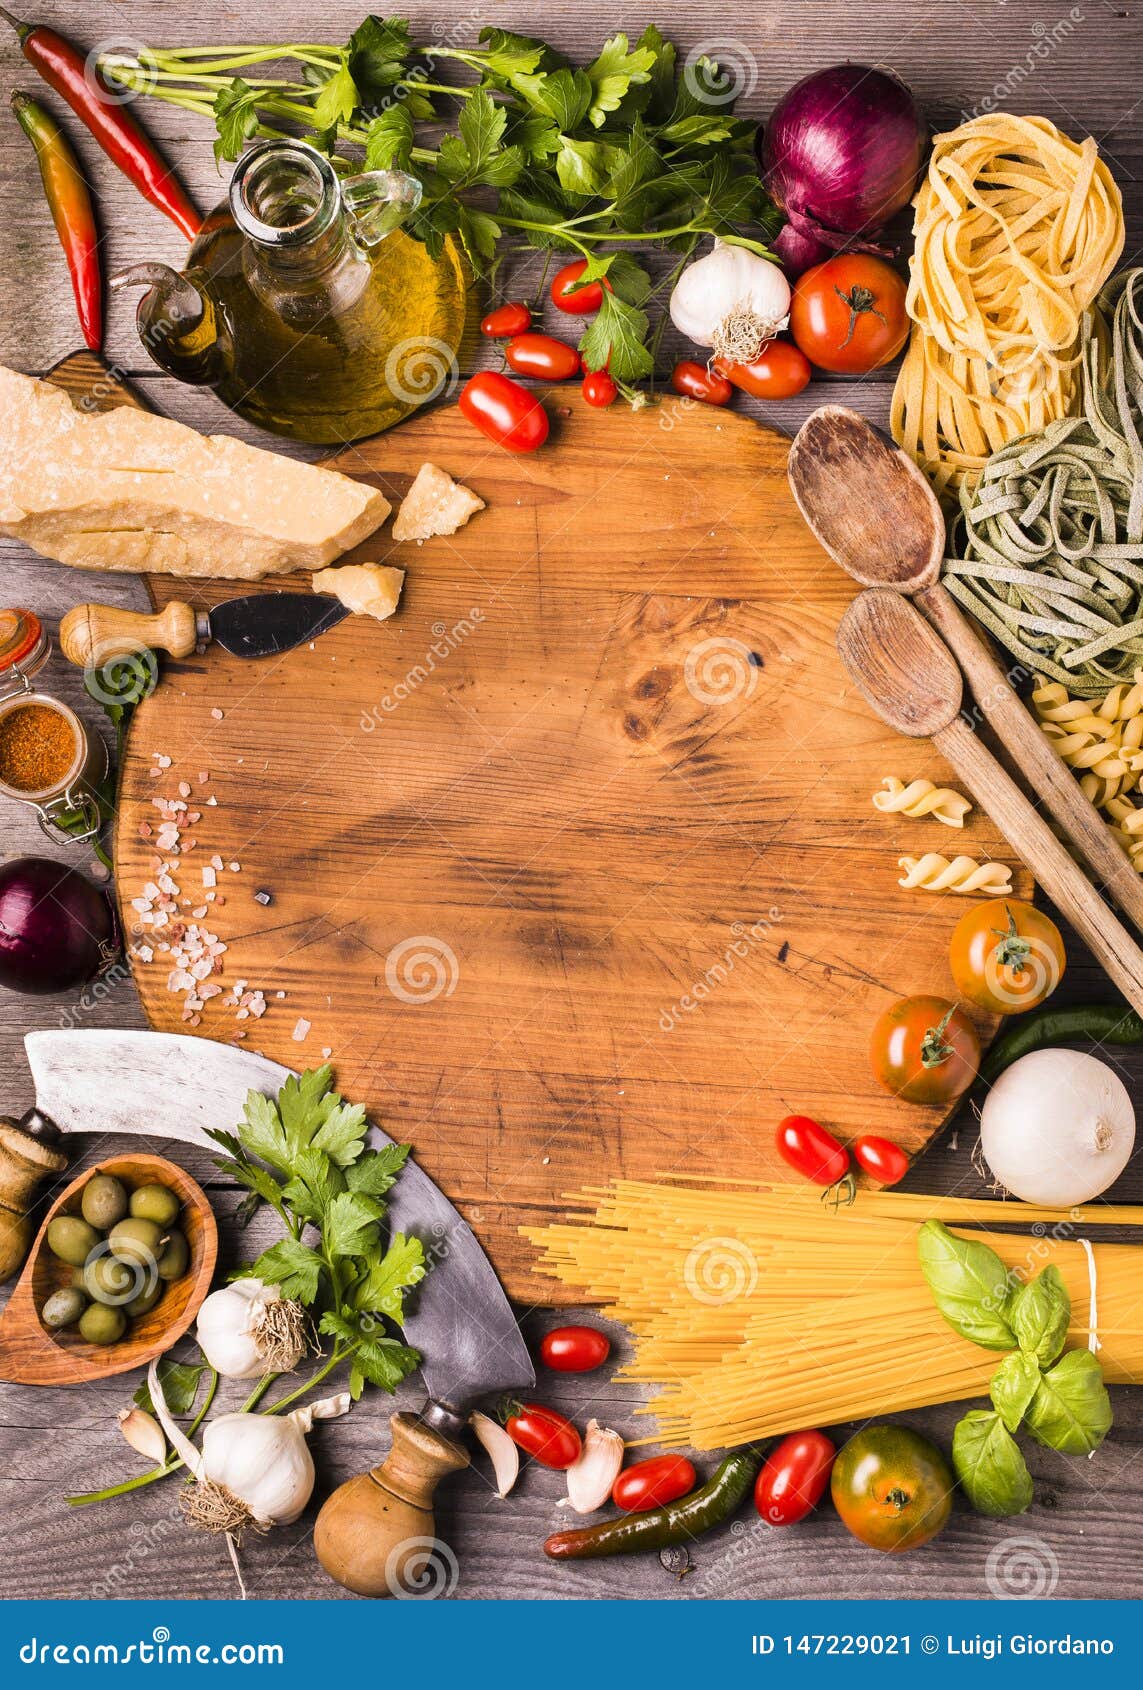 Mediterranean Diet with Pasta and Genuine Ingredients Stock Image ...